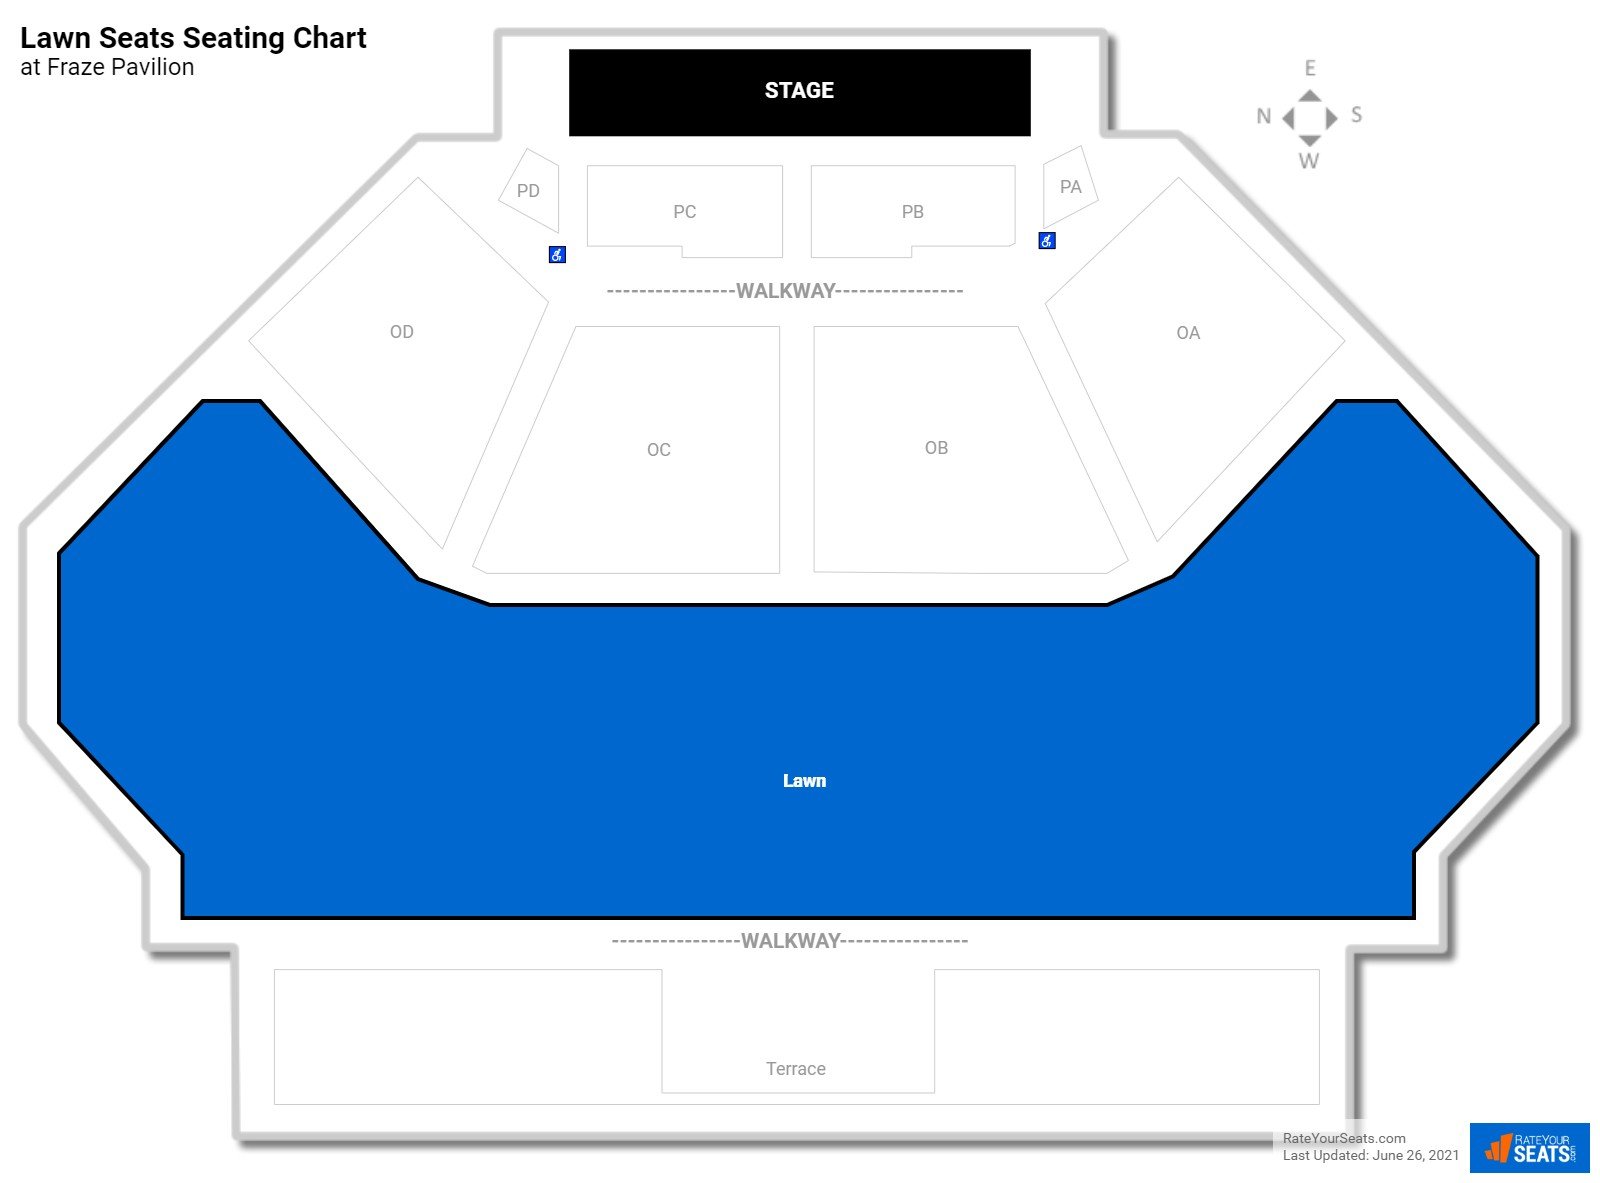 Concert Lawn Seats Seating Chart at Fraze Pavilion